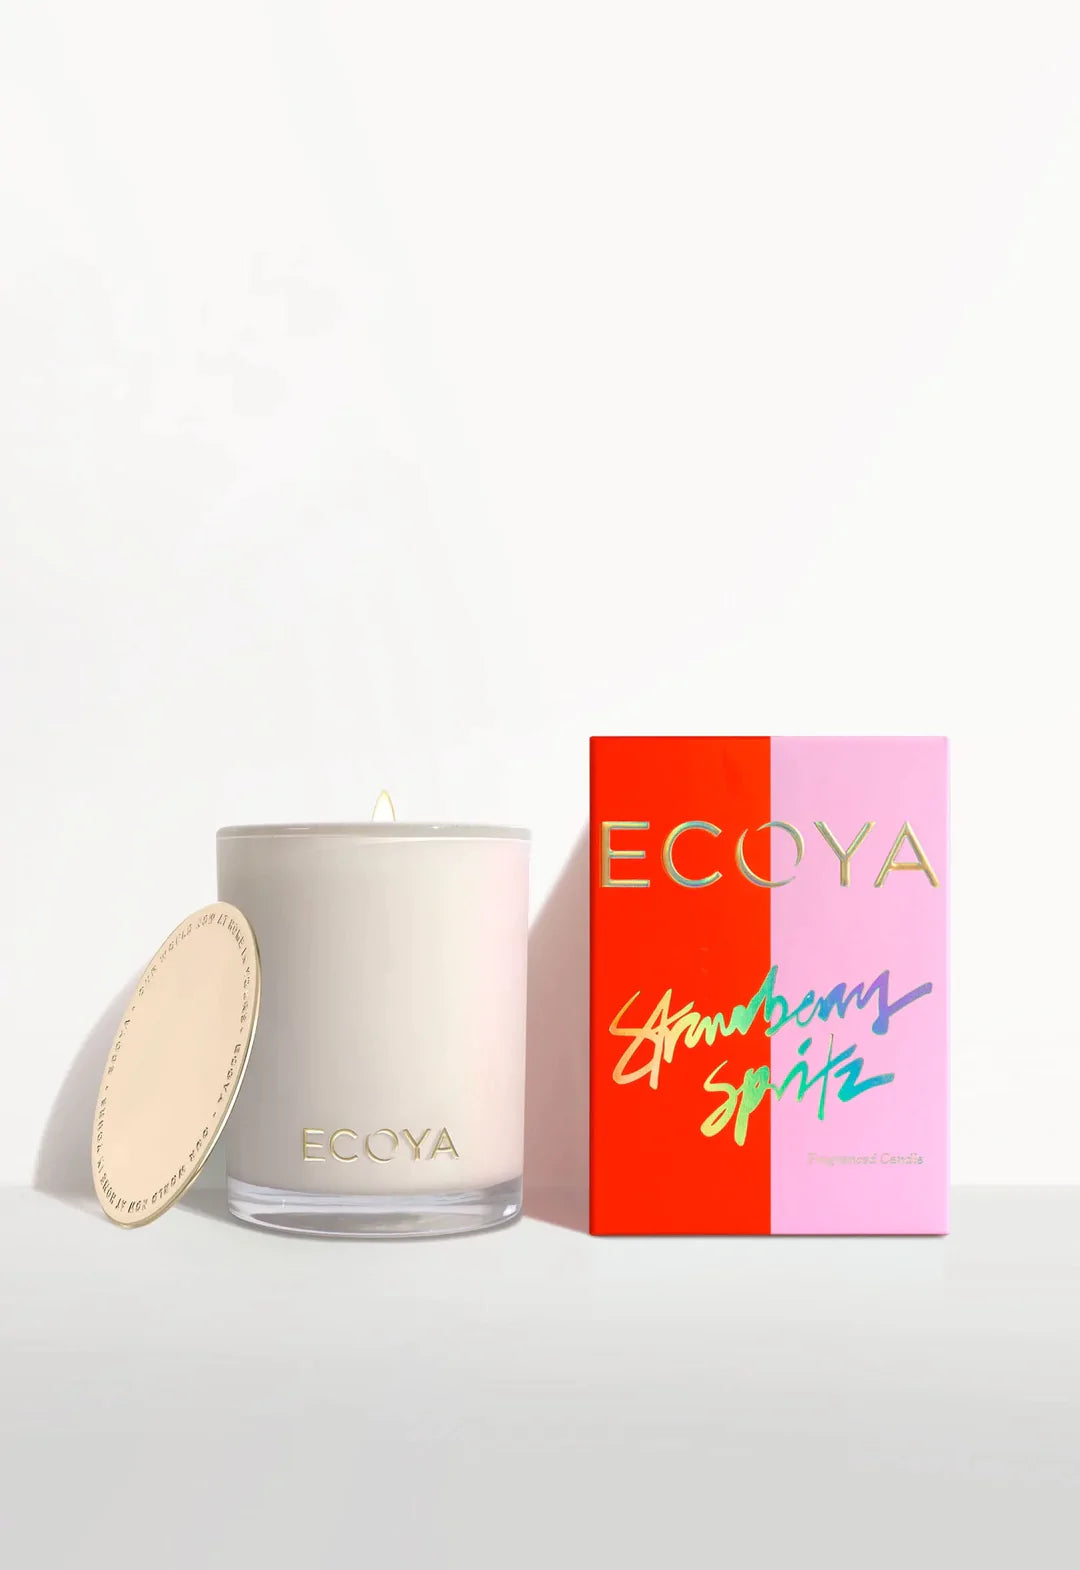 Posy Bag & Ecoya Candle Gift Package & Vase